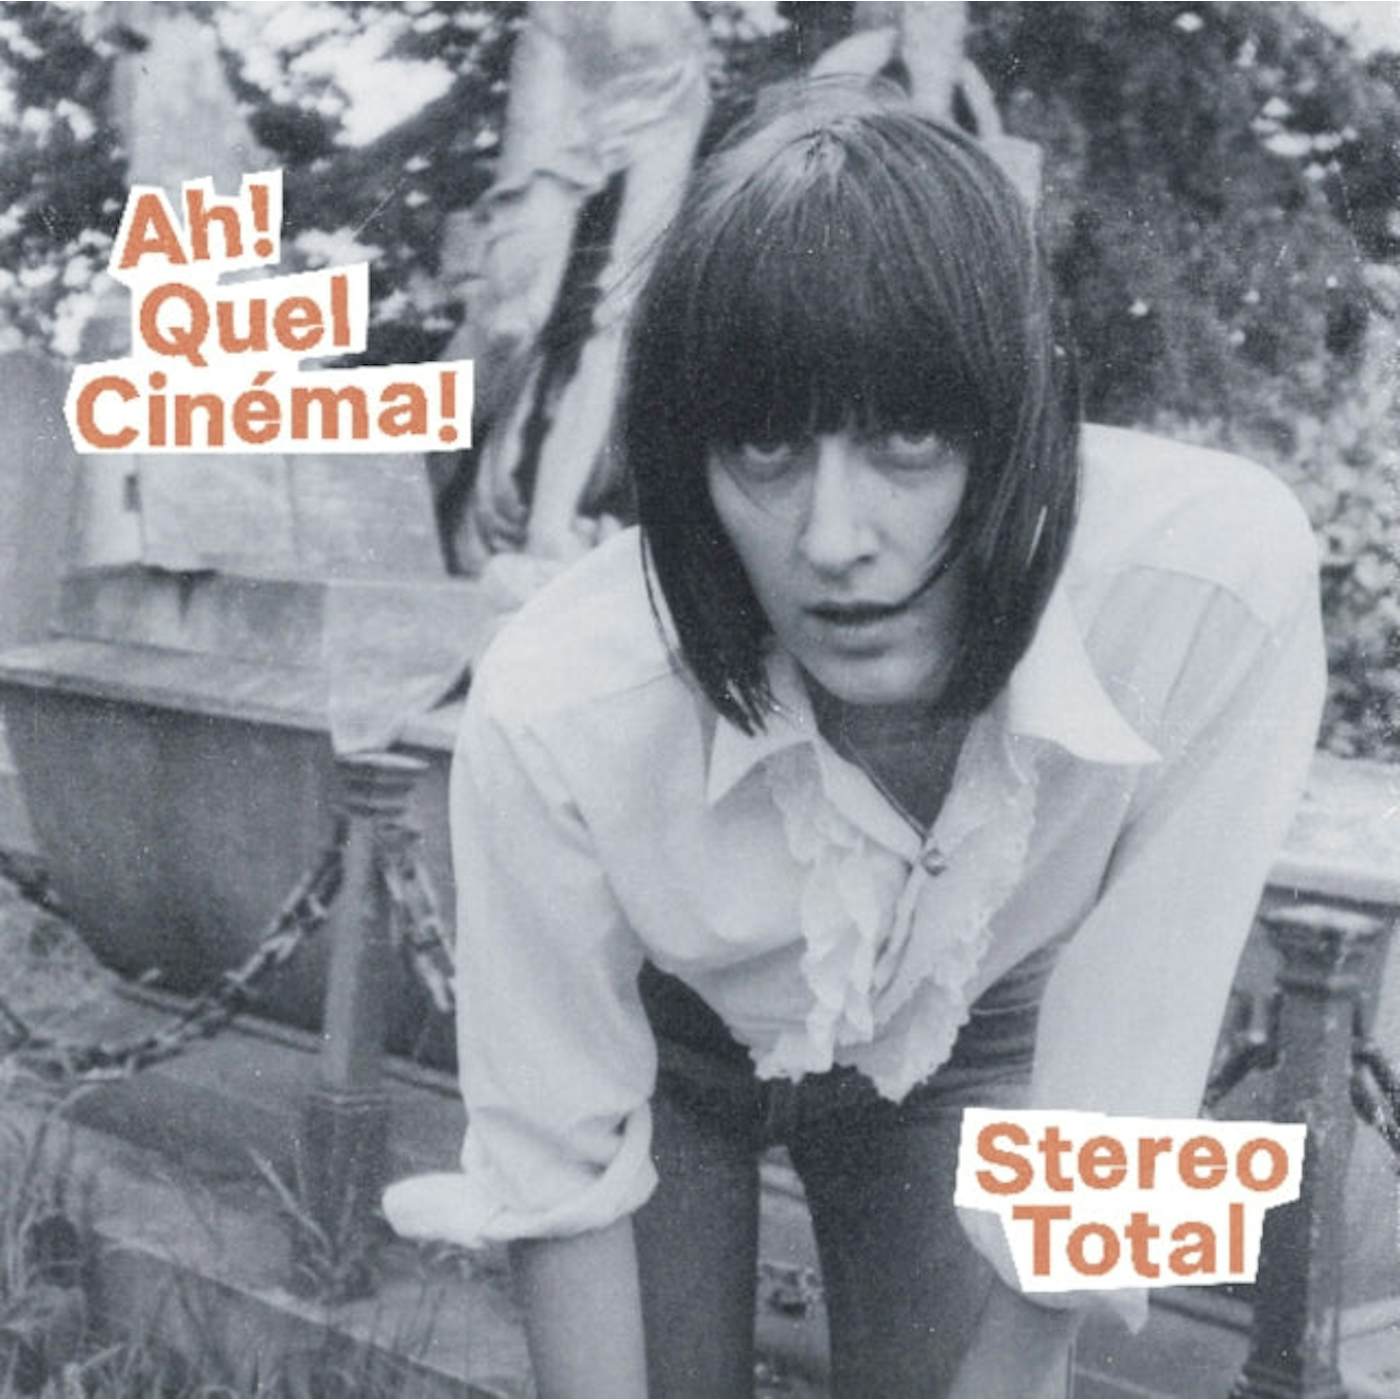 Stereo Total LP - Ah! Quel Cinema! (Vinyl)